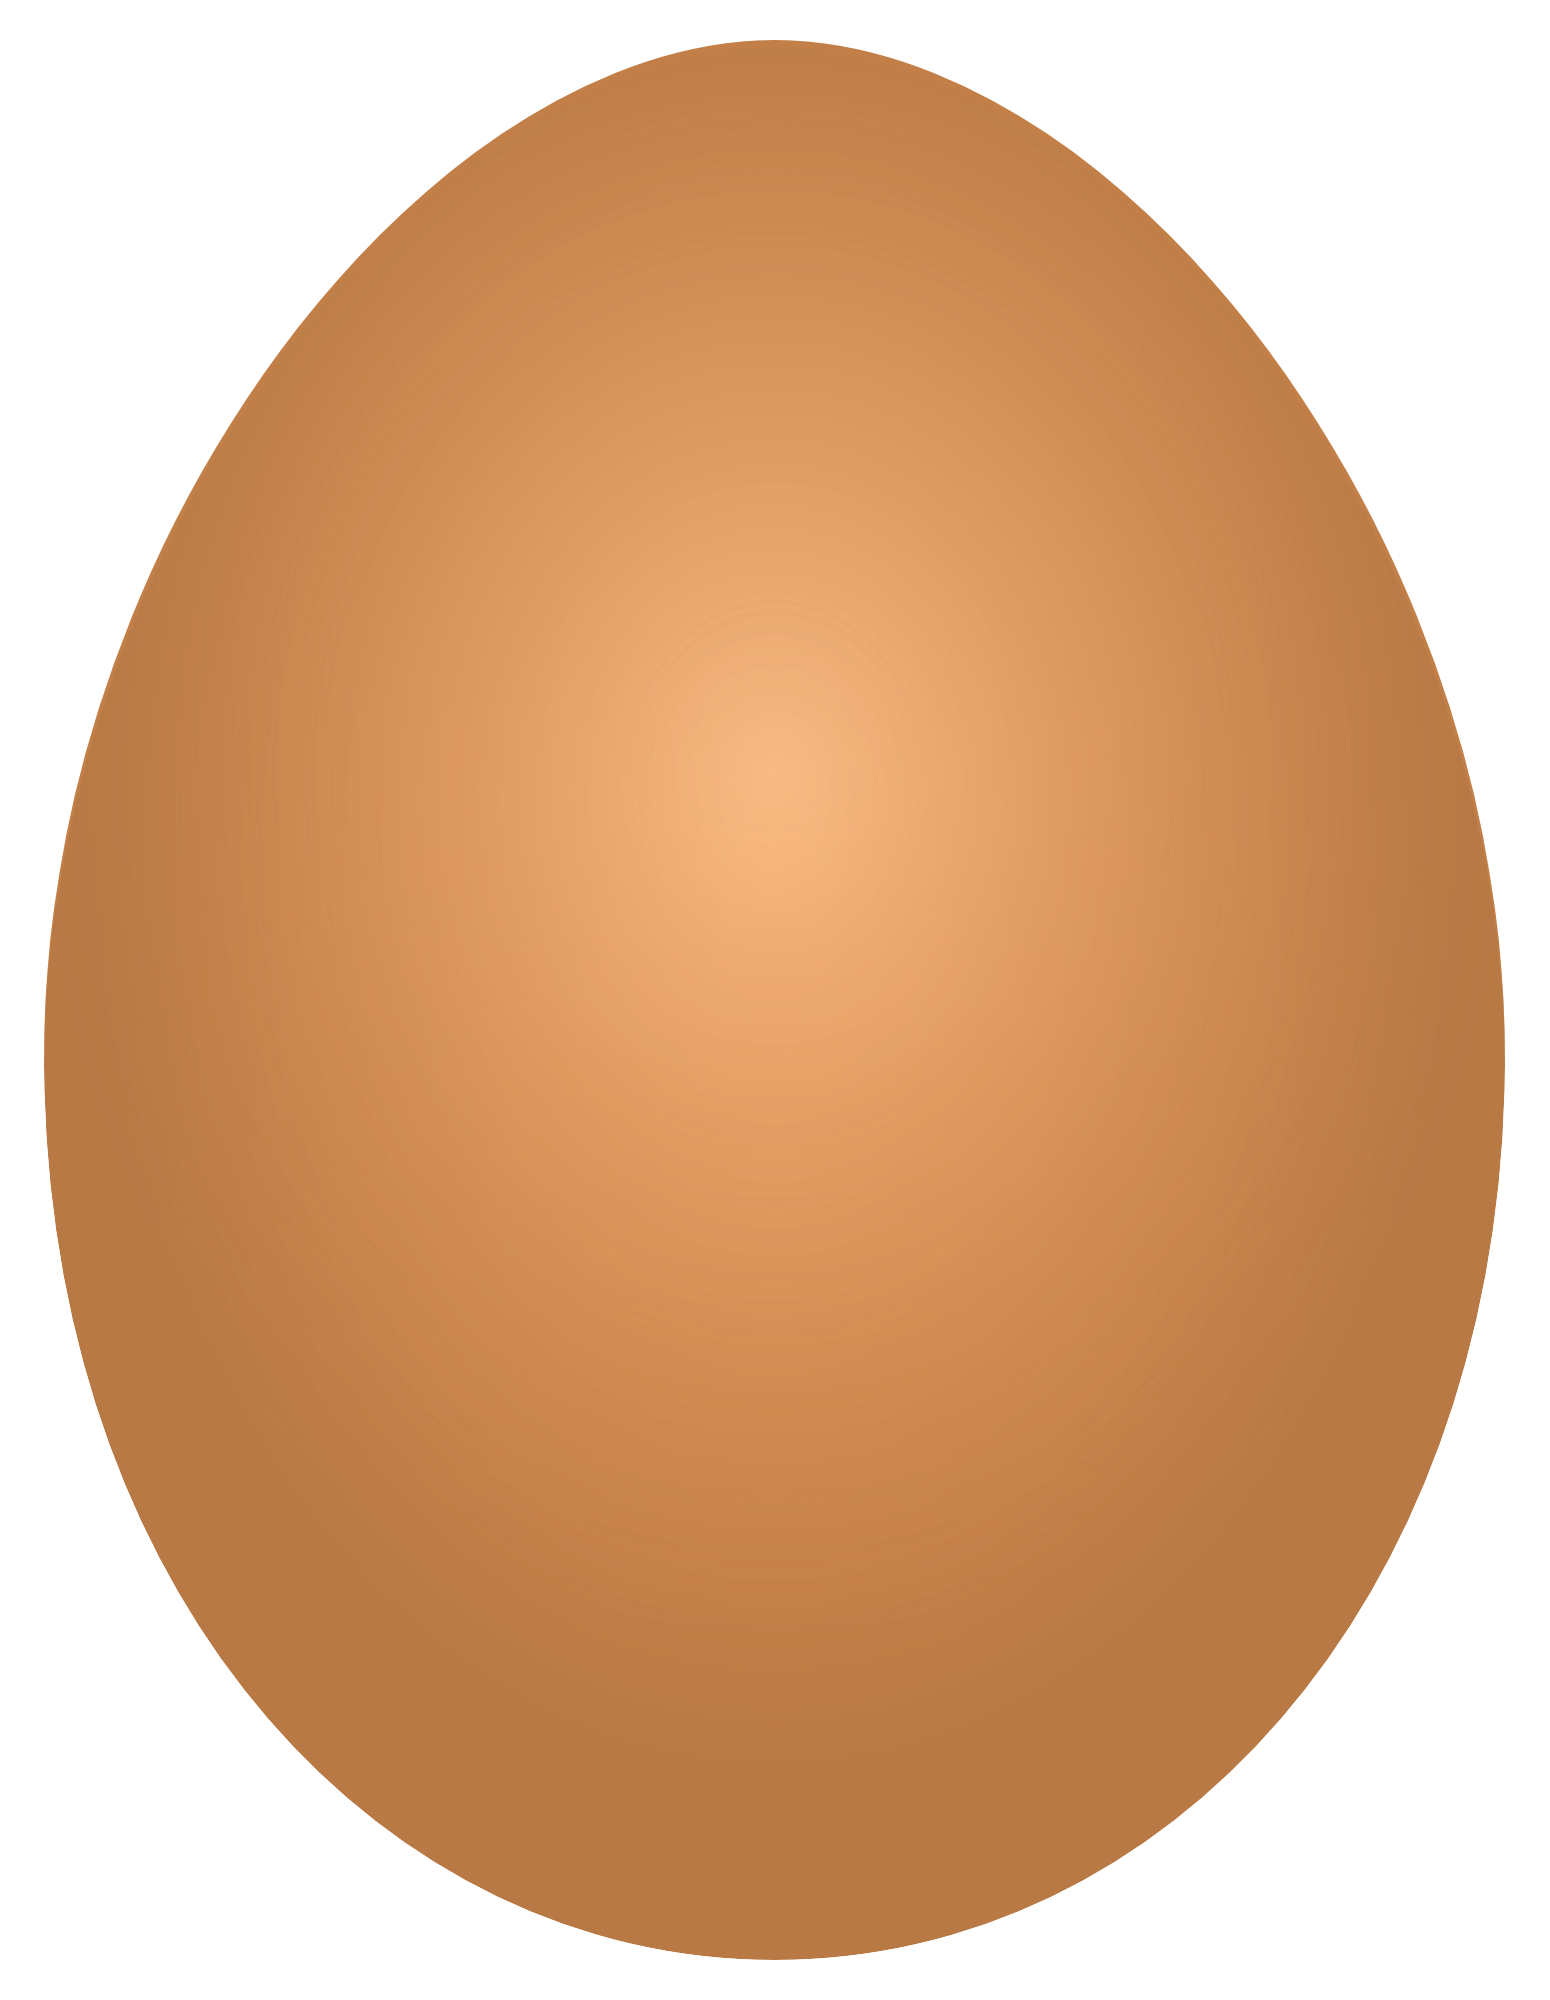 Egg PNG HD Image - Egg Png